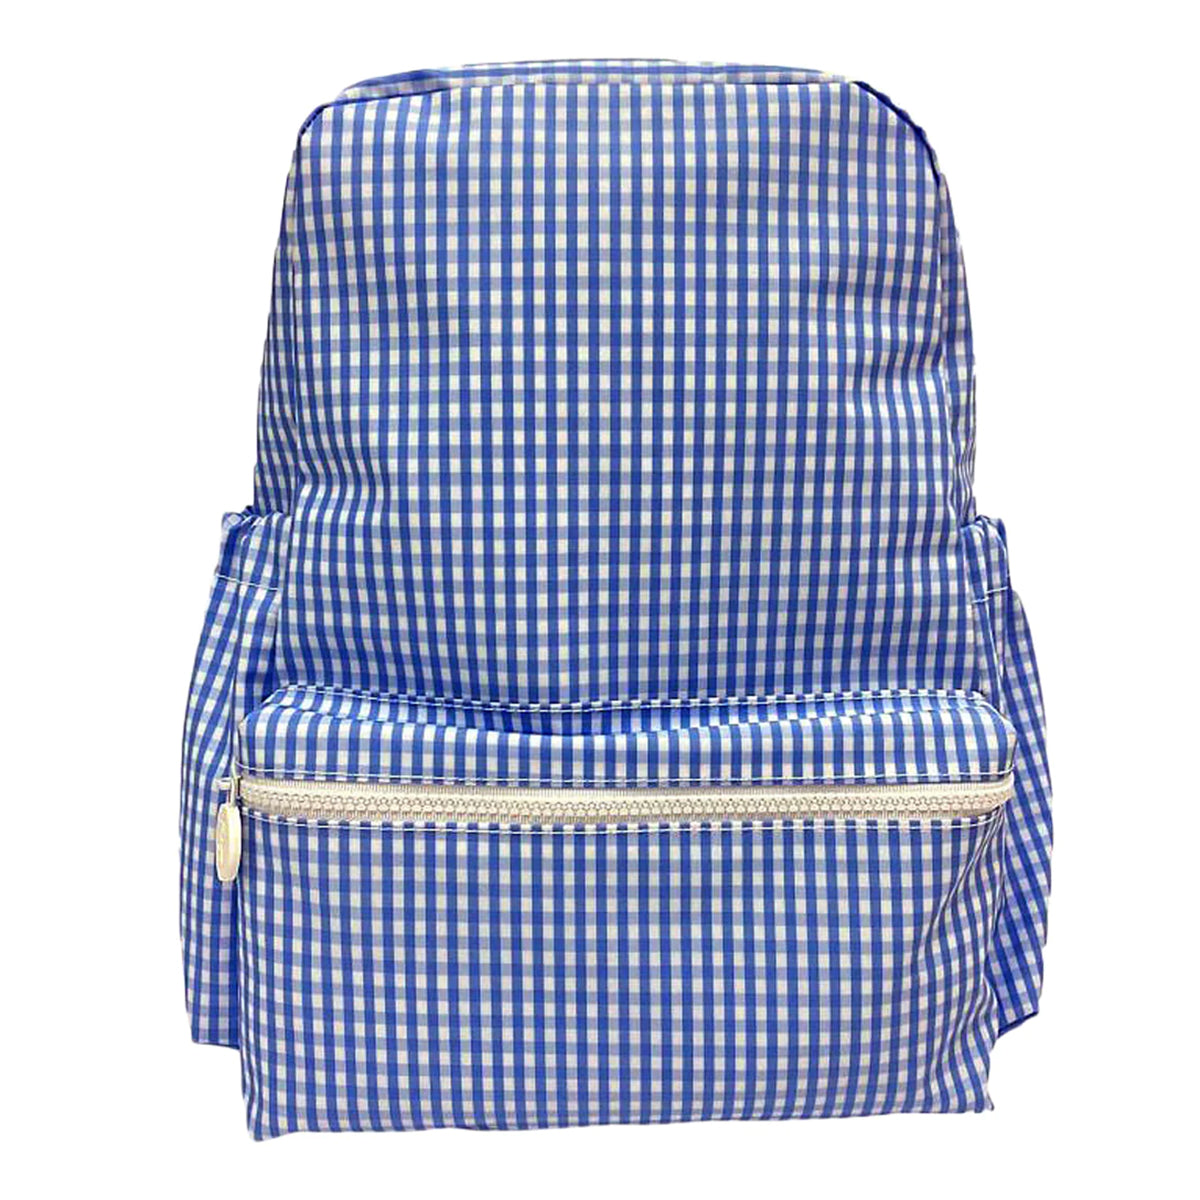 TRVL Design Backpacker Sky Blue Gingham Backpack